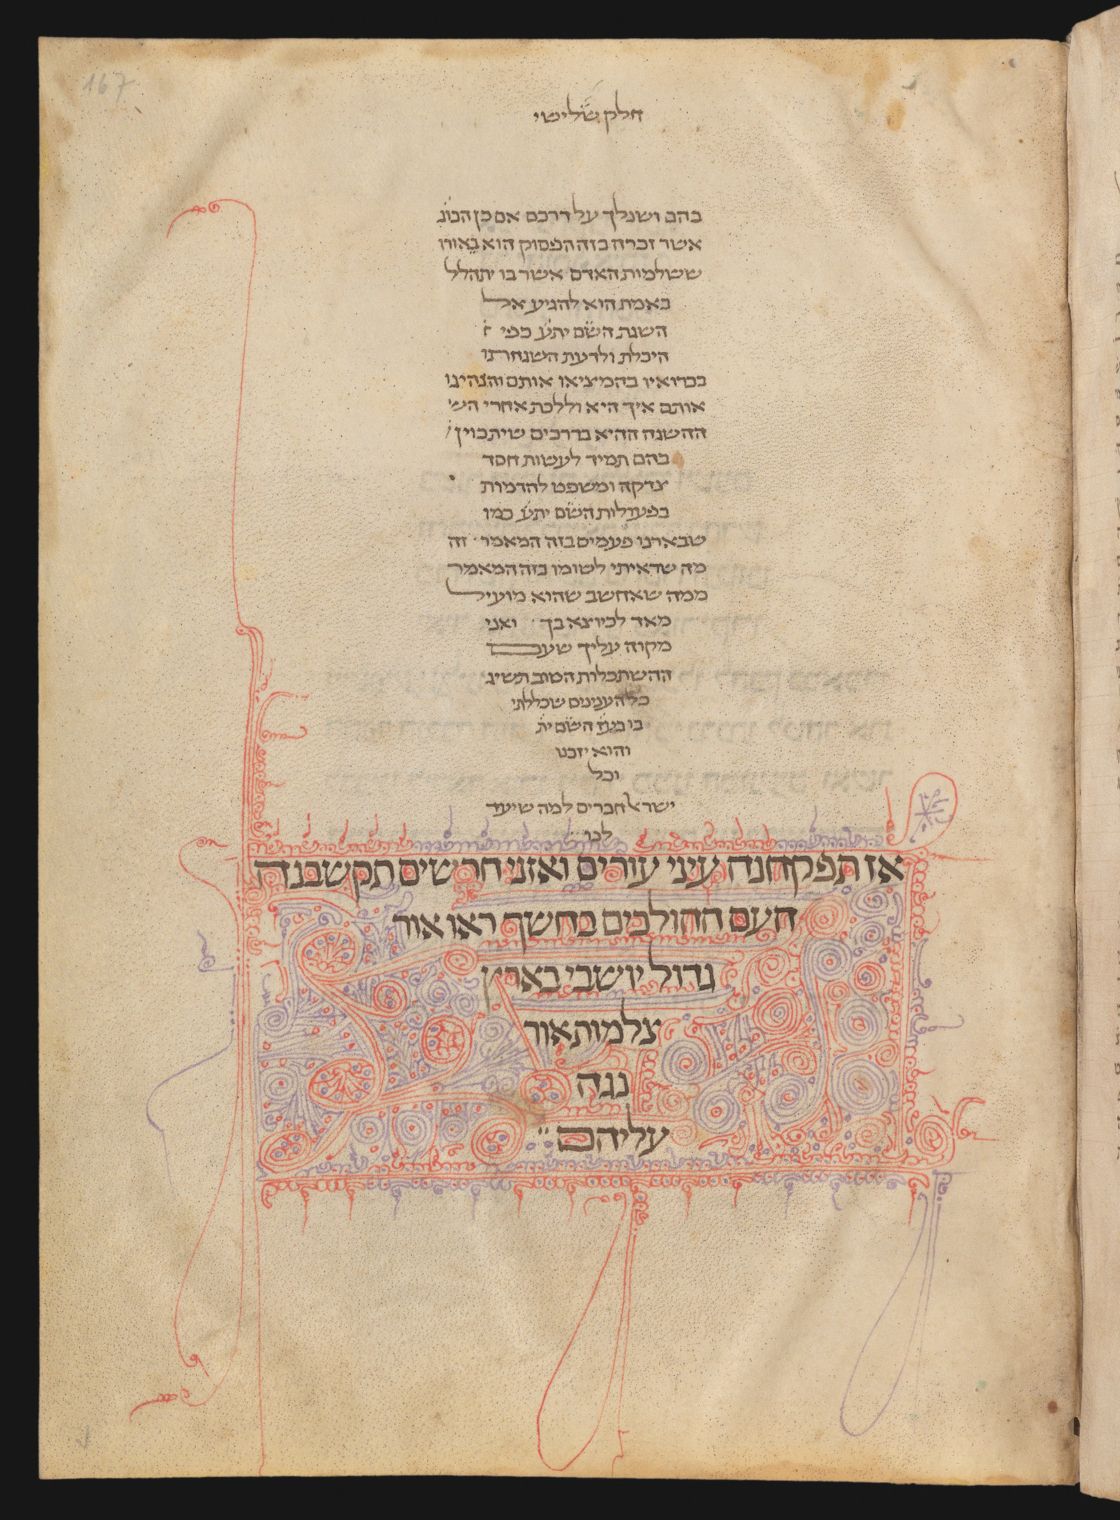 Zürich, Zentralbibliothek, Ms. Car. C 126, f. 167r – Moses Maimonides, Sefer Moreh Nevukhim